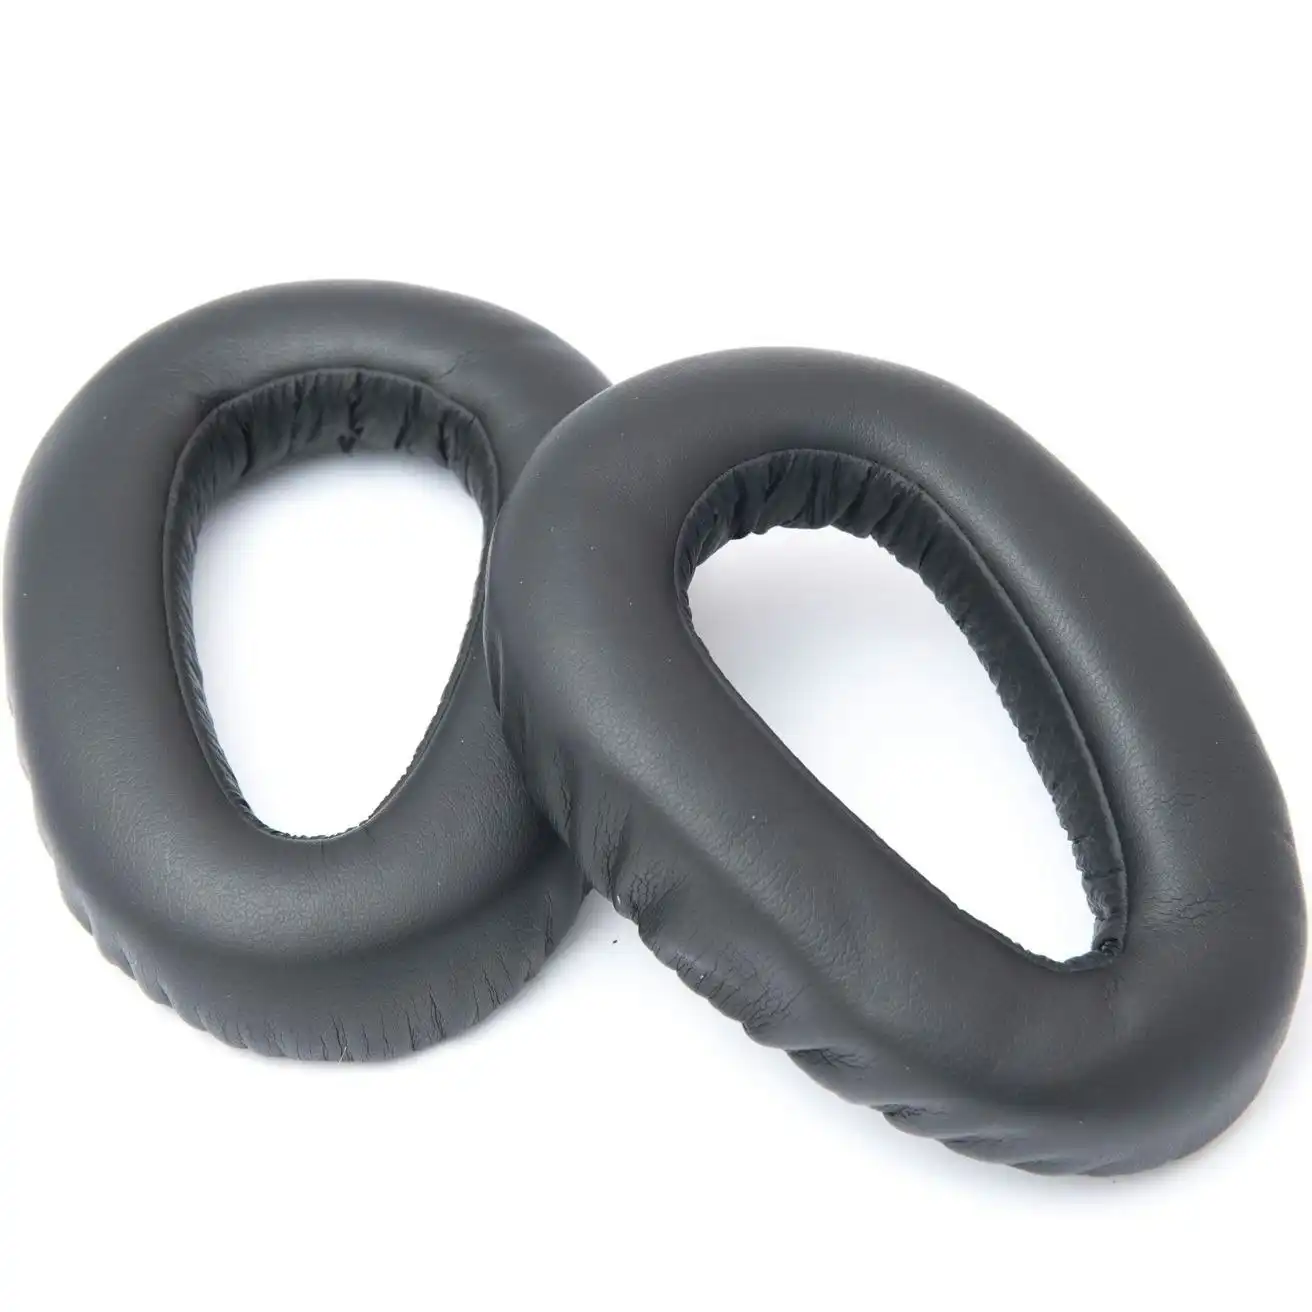 Sennheiser Ear Pads Cover Cushion for PXC 550/480/MB 660 Series Headset Black